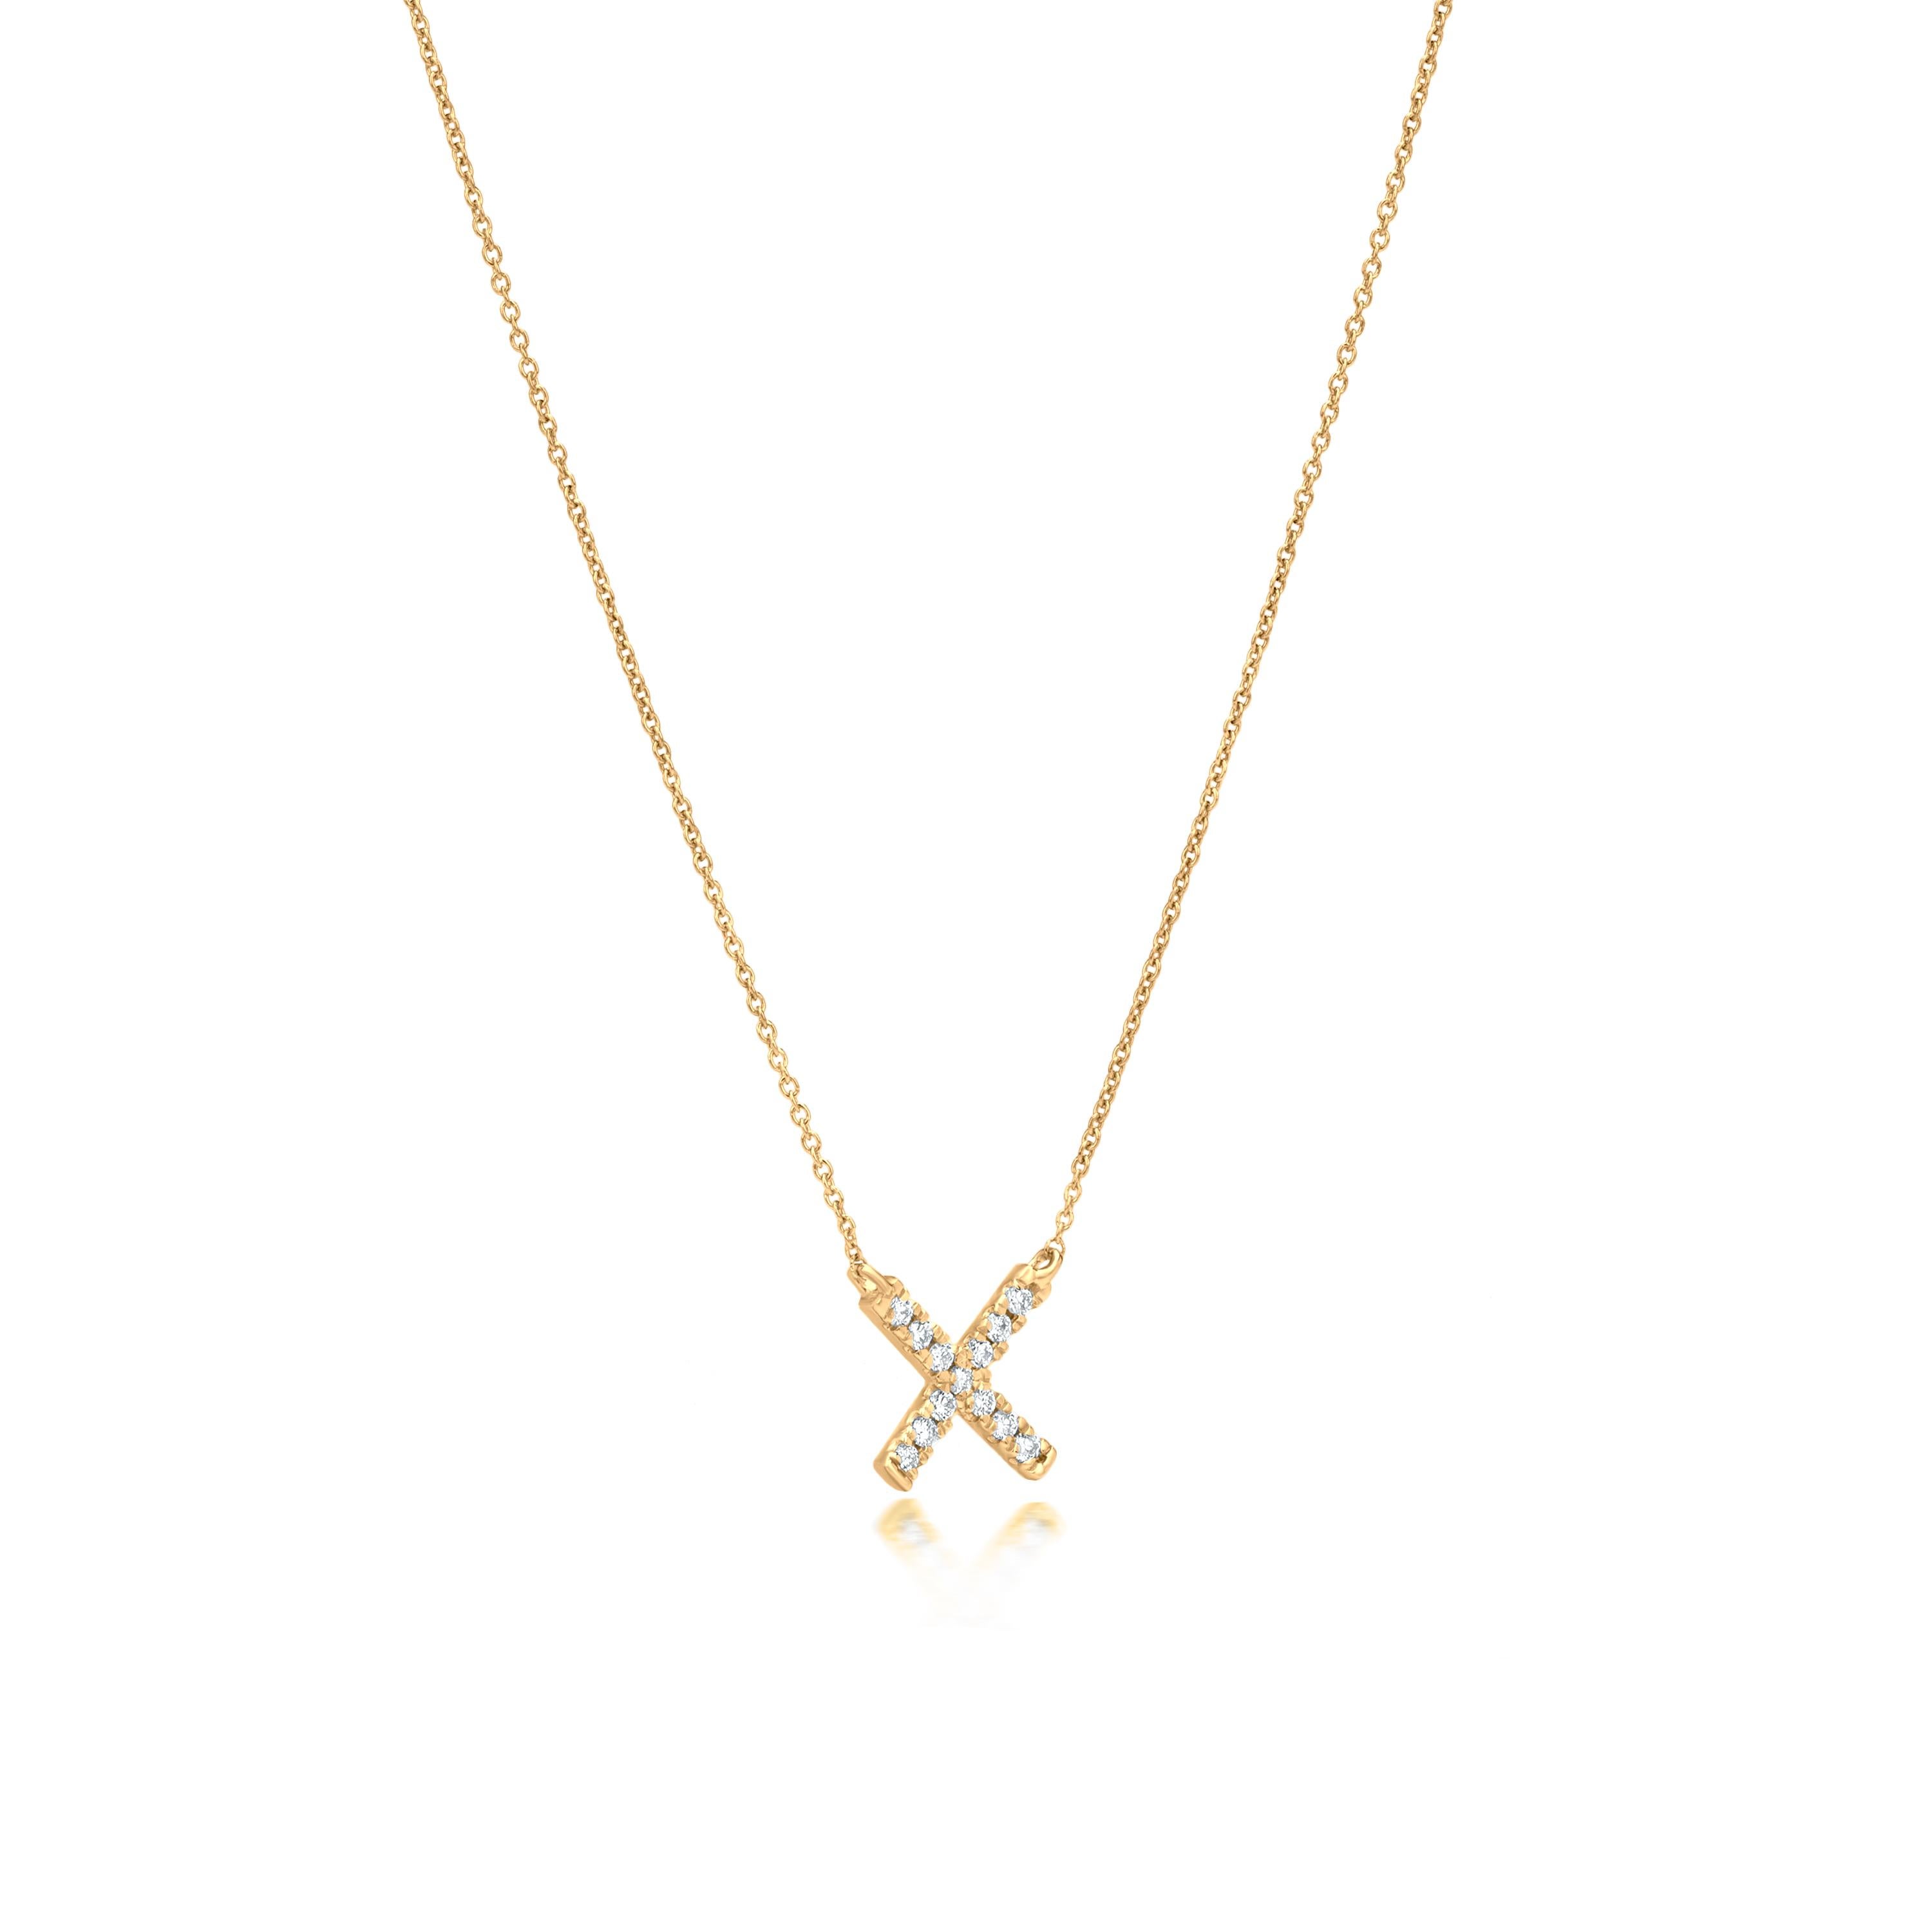 Round Cut Luxle Diamond X Pendant Necklace in 18k Yellow Gold